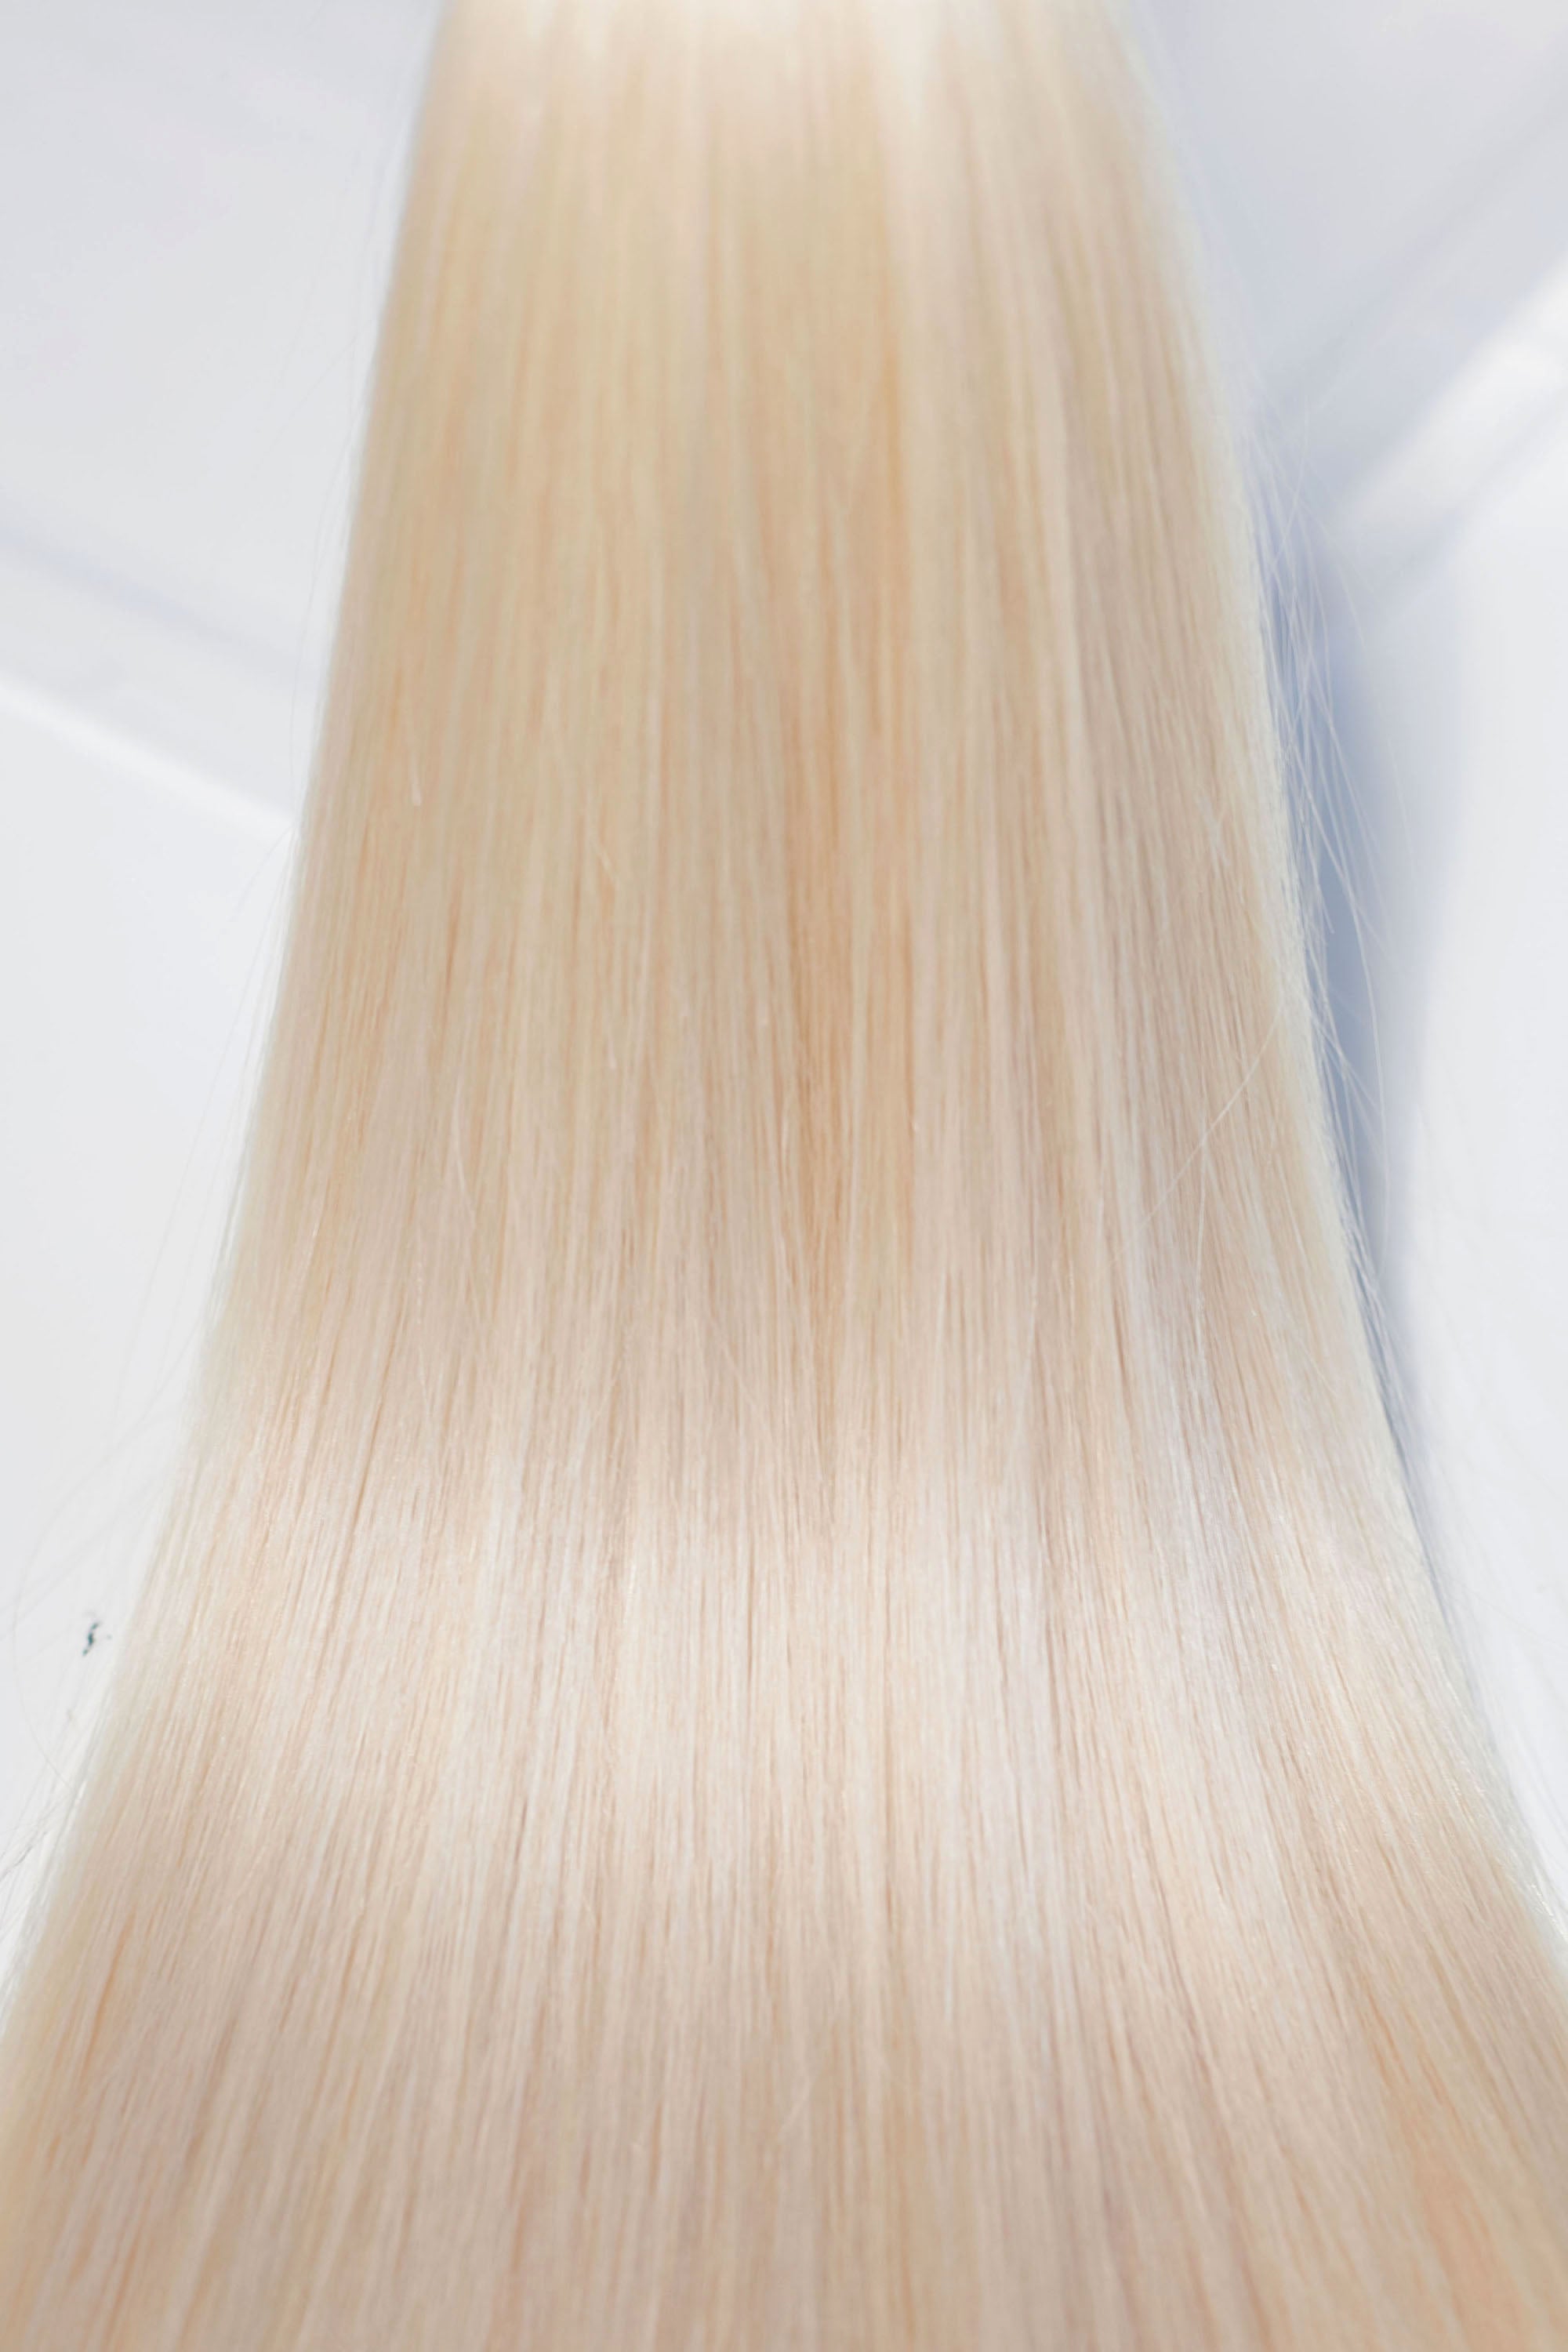 Behair professional Keratin Tip "Premium" 22" (55cm) Natural Straight Ice Blond #000 - 25g (Micro - 0.5g each pcs) hair extensions